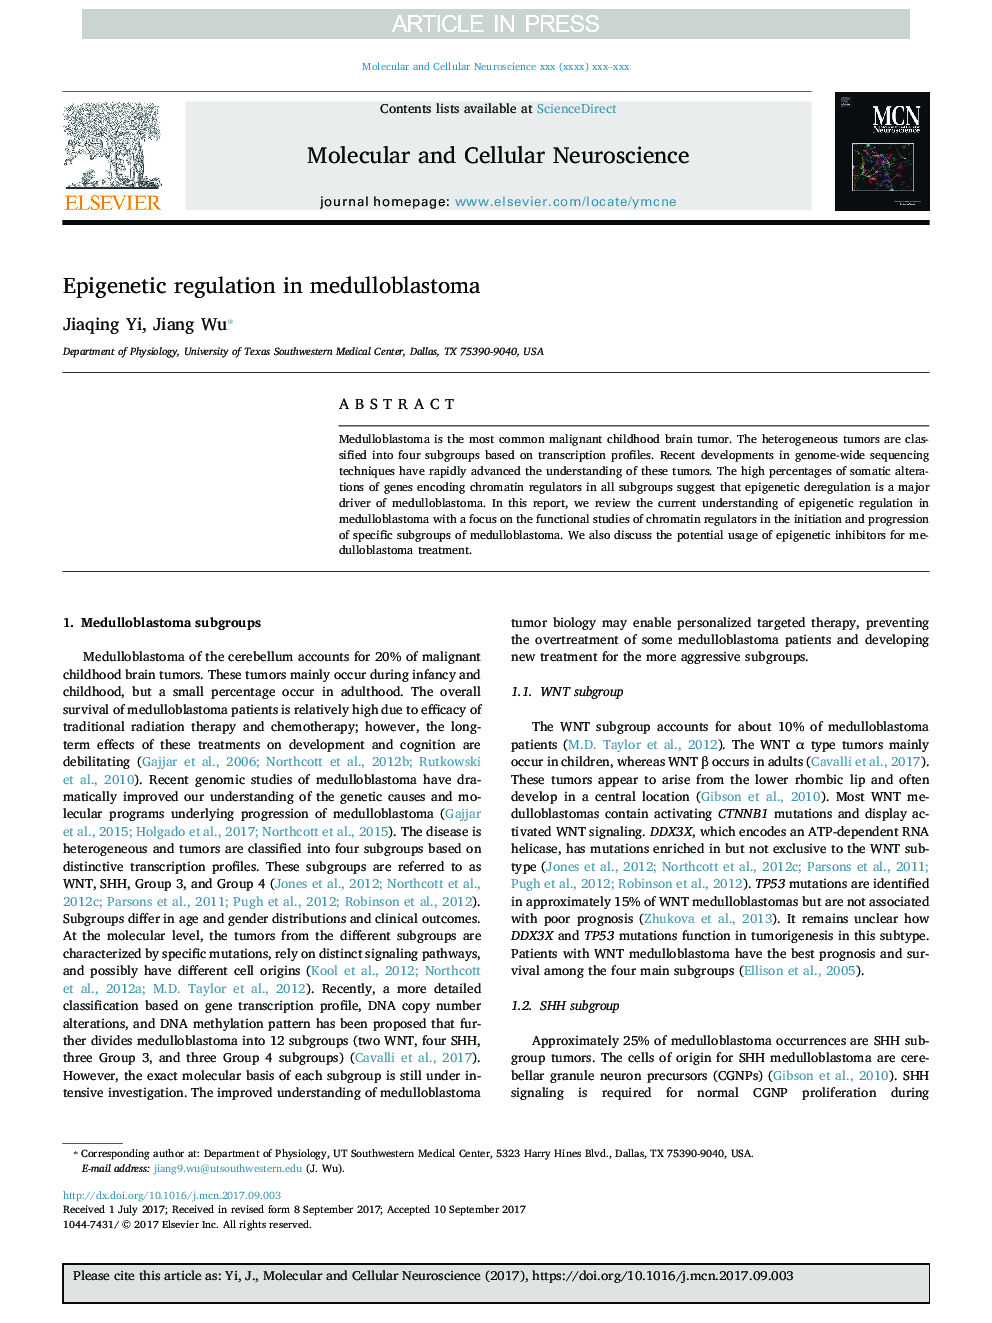 Epigenetic regulation in medulloblastoma